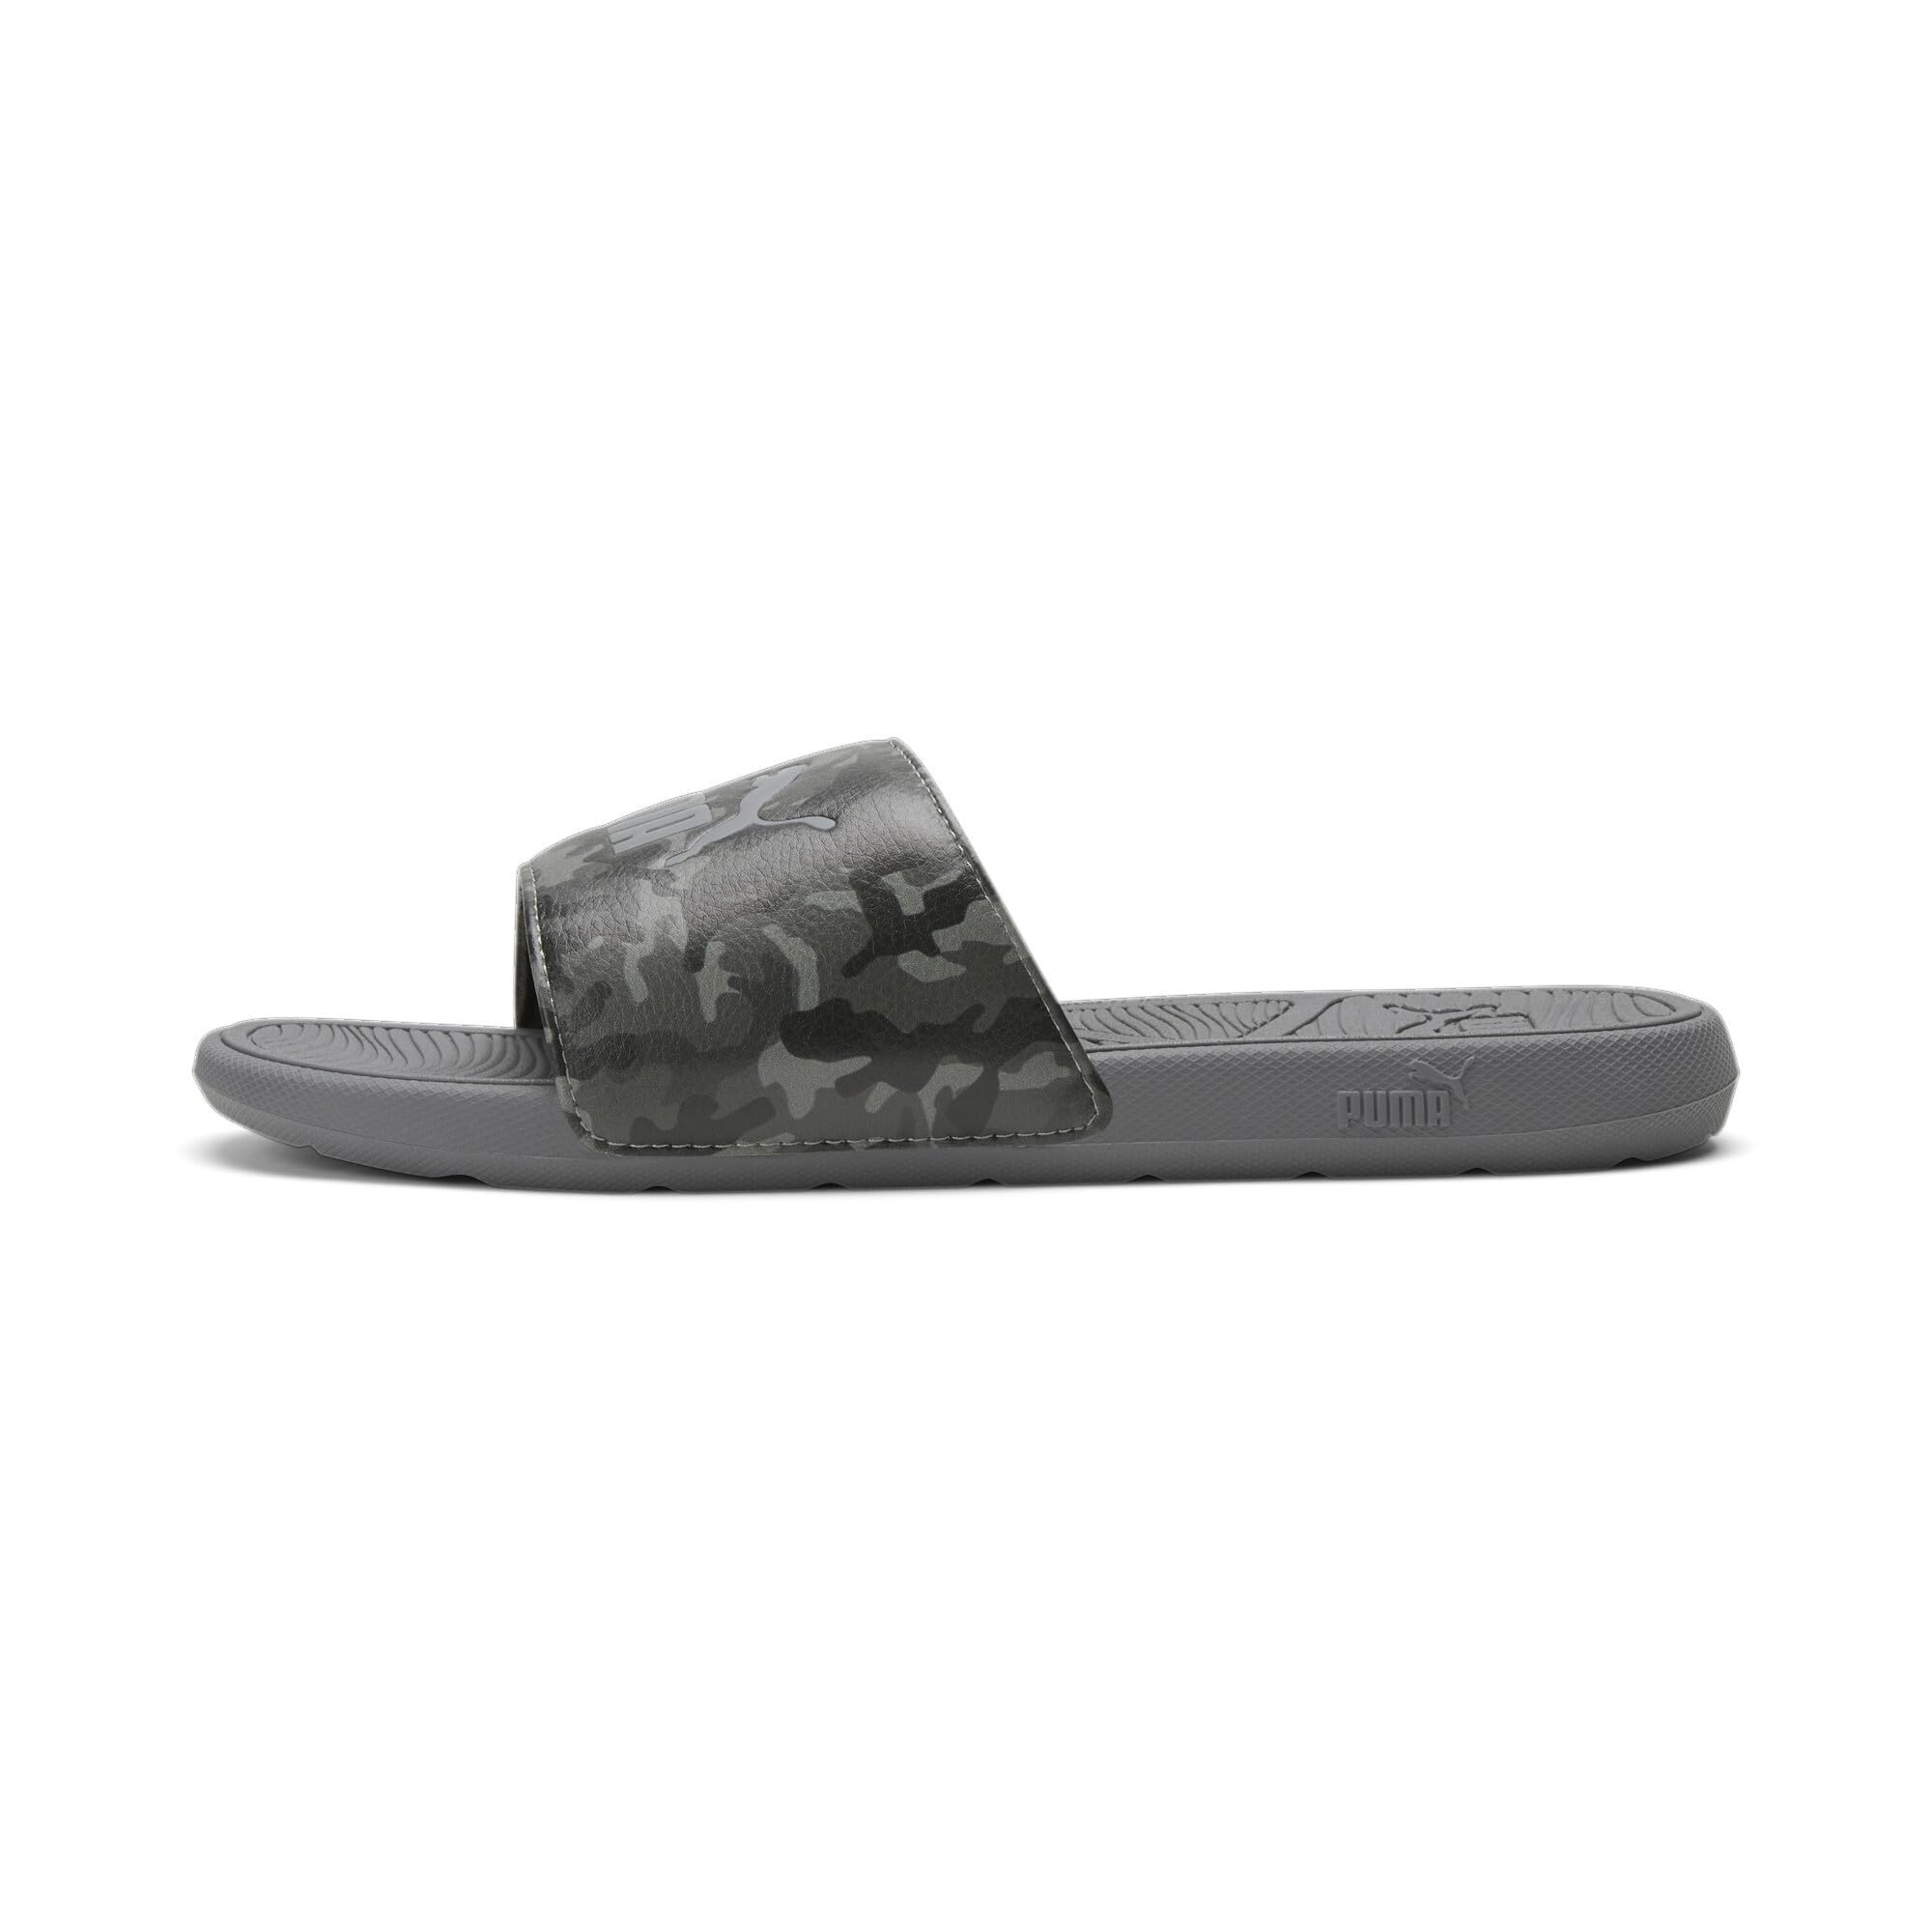 PUMA Men's Cool Cat 2.0 Camo Slide Sandal